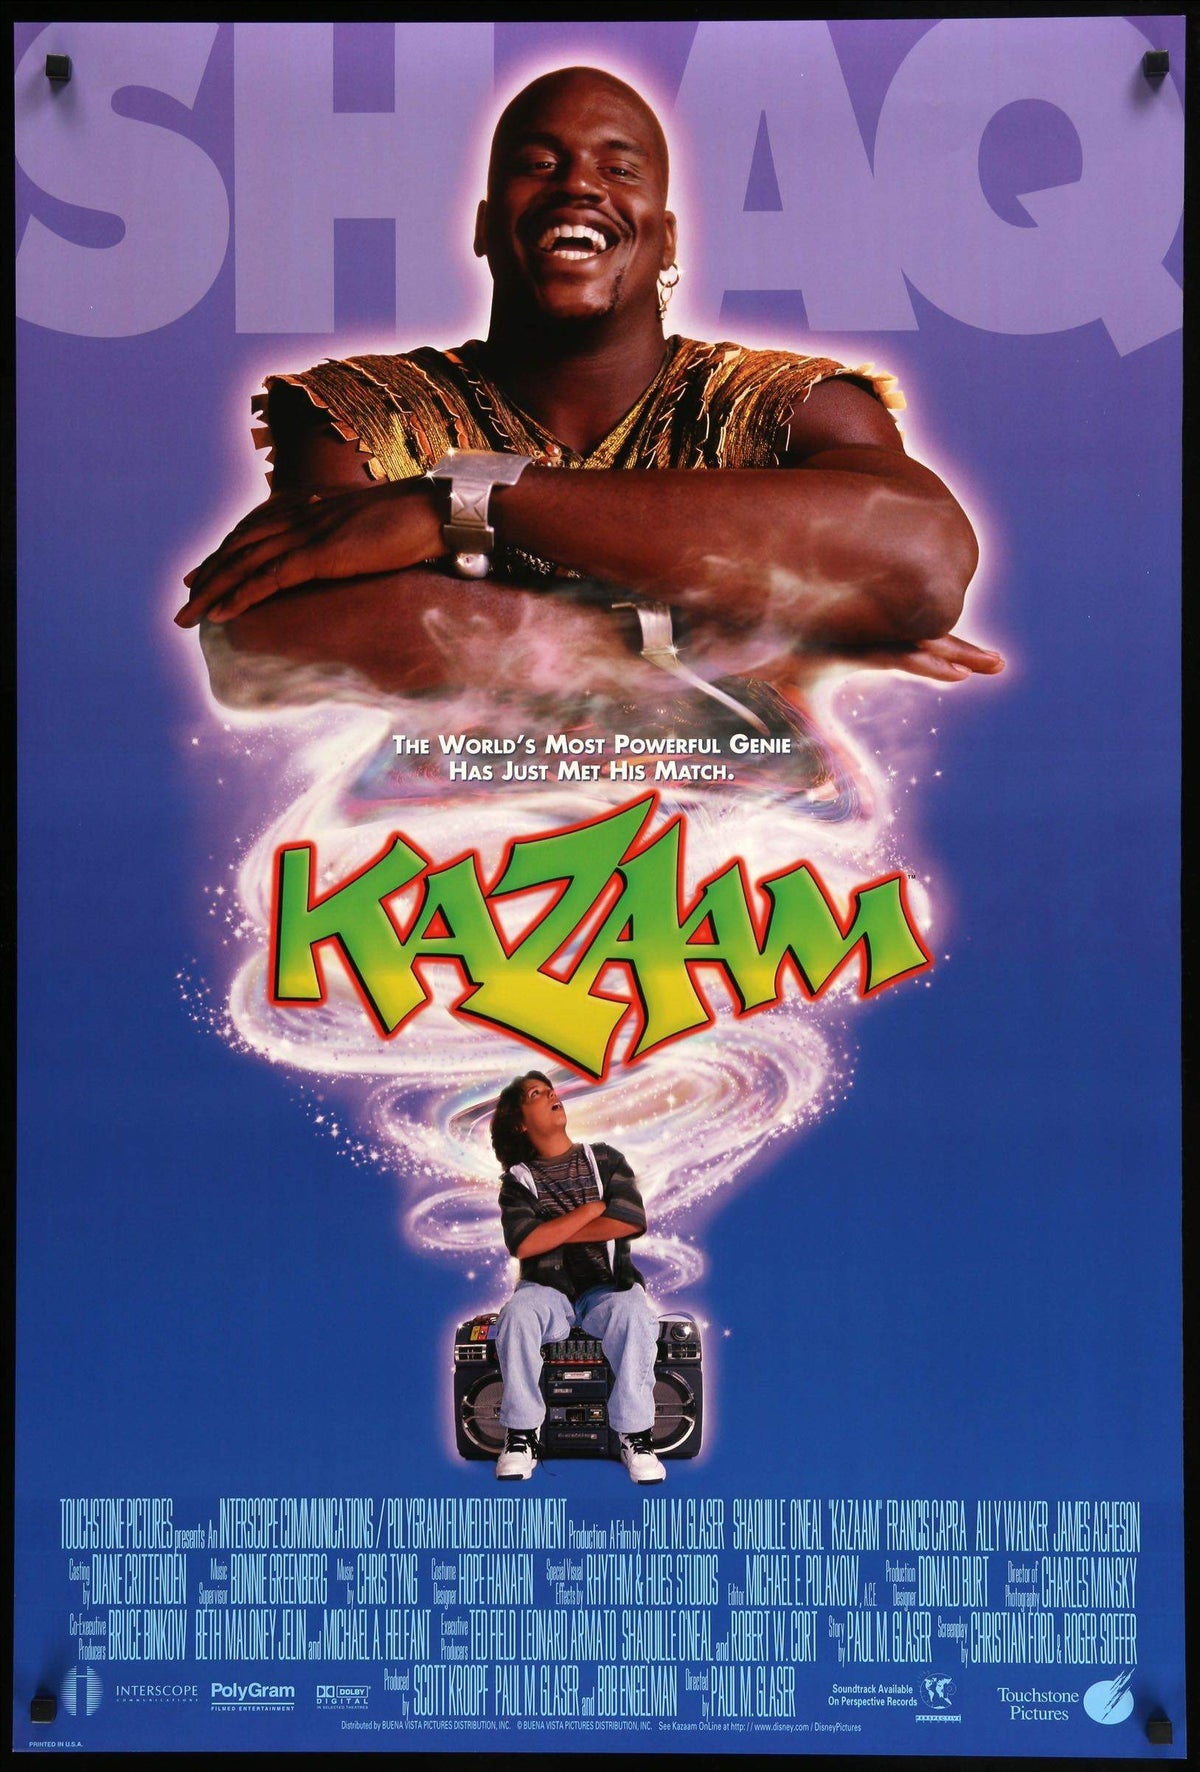 Kazaam (1996) original movie poster for sale at Original Film Art